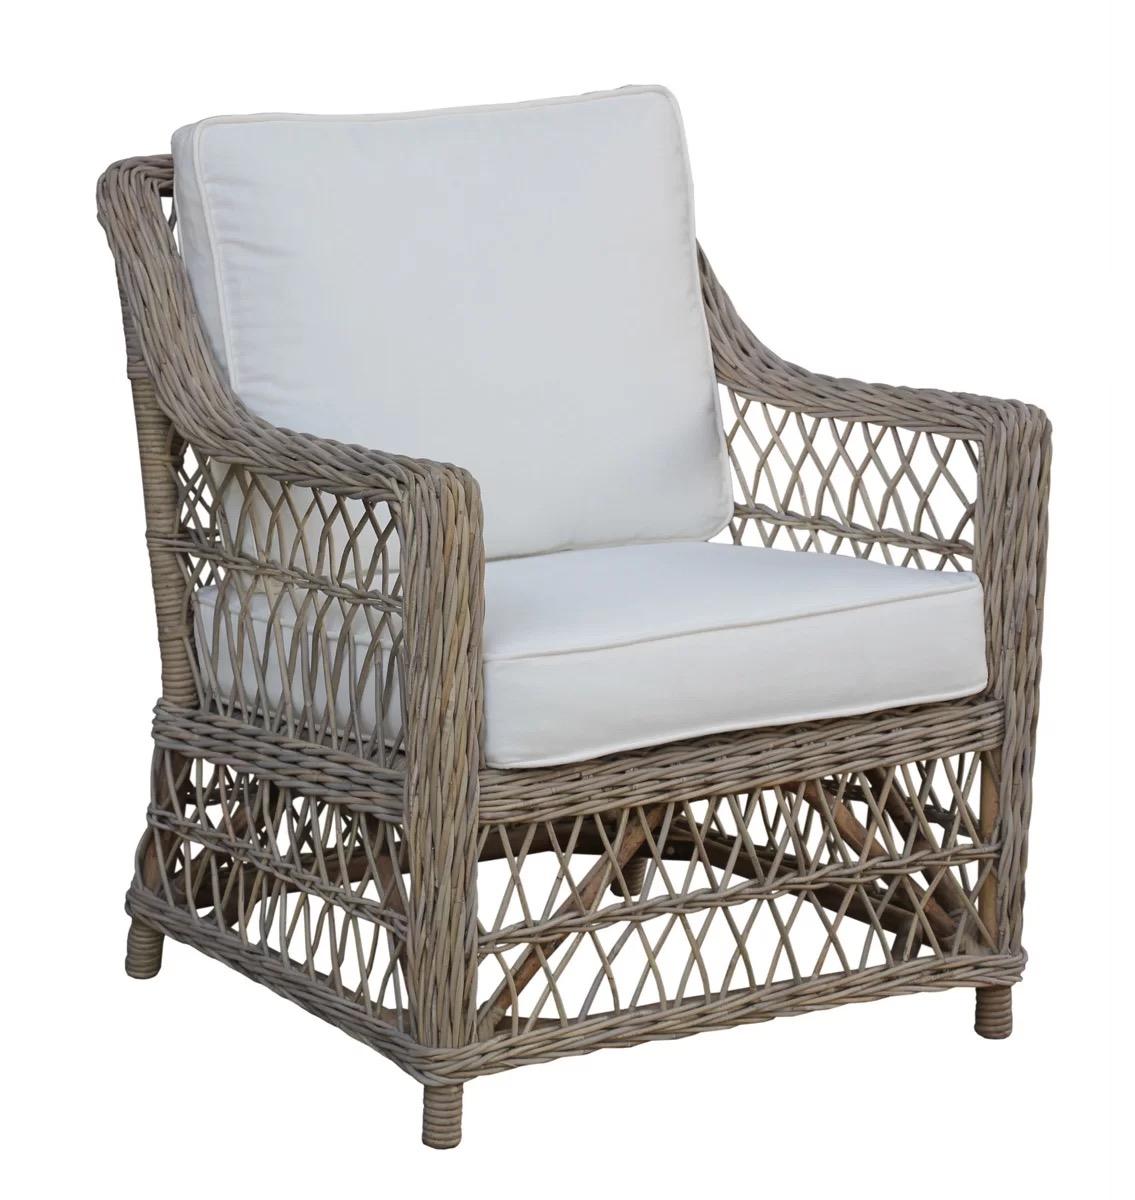 Classic Outdoor Chair Seaside PJS-1201-KBU-LC in Gray, Beige Fabric